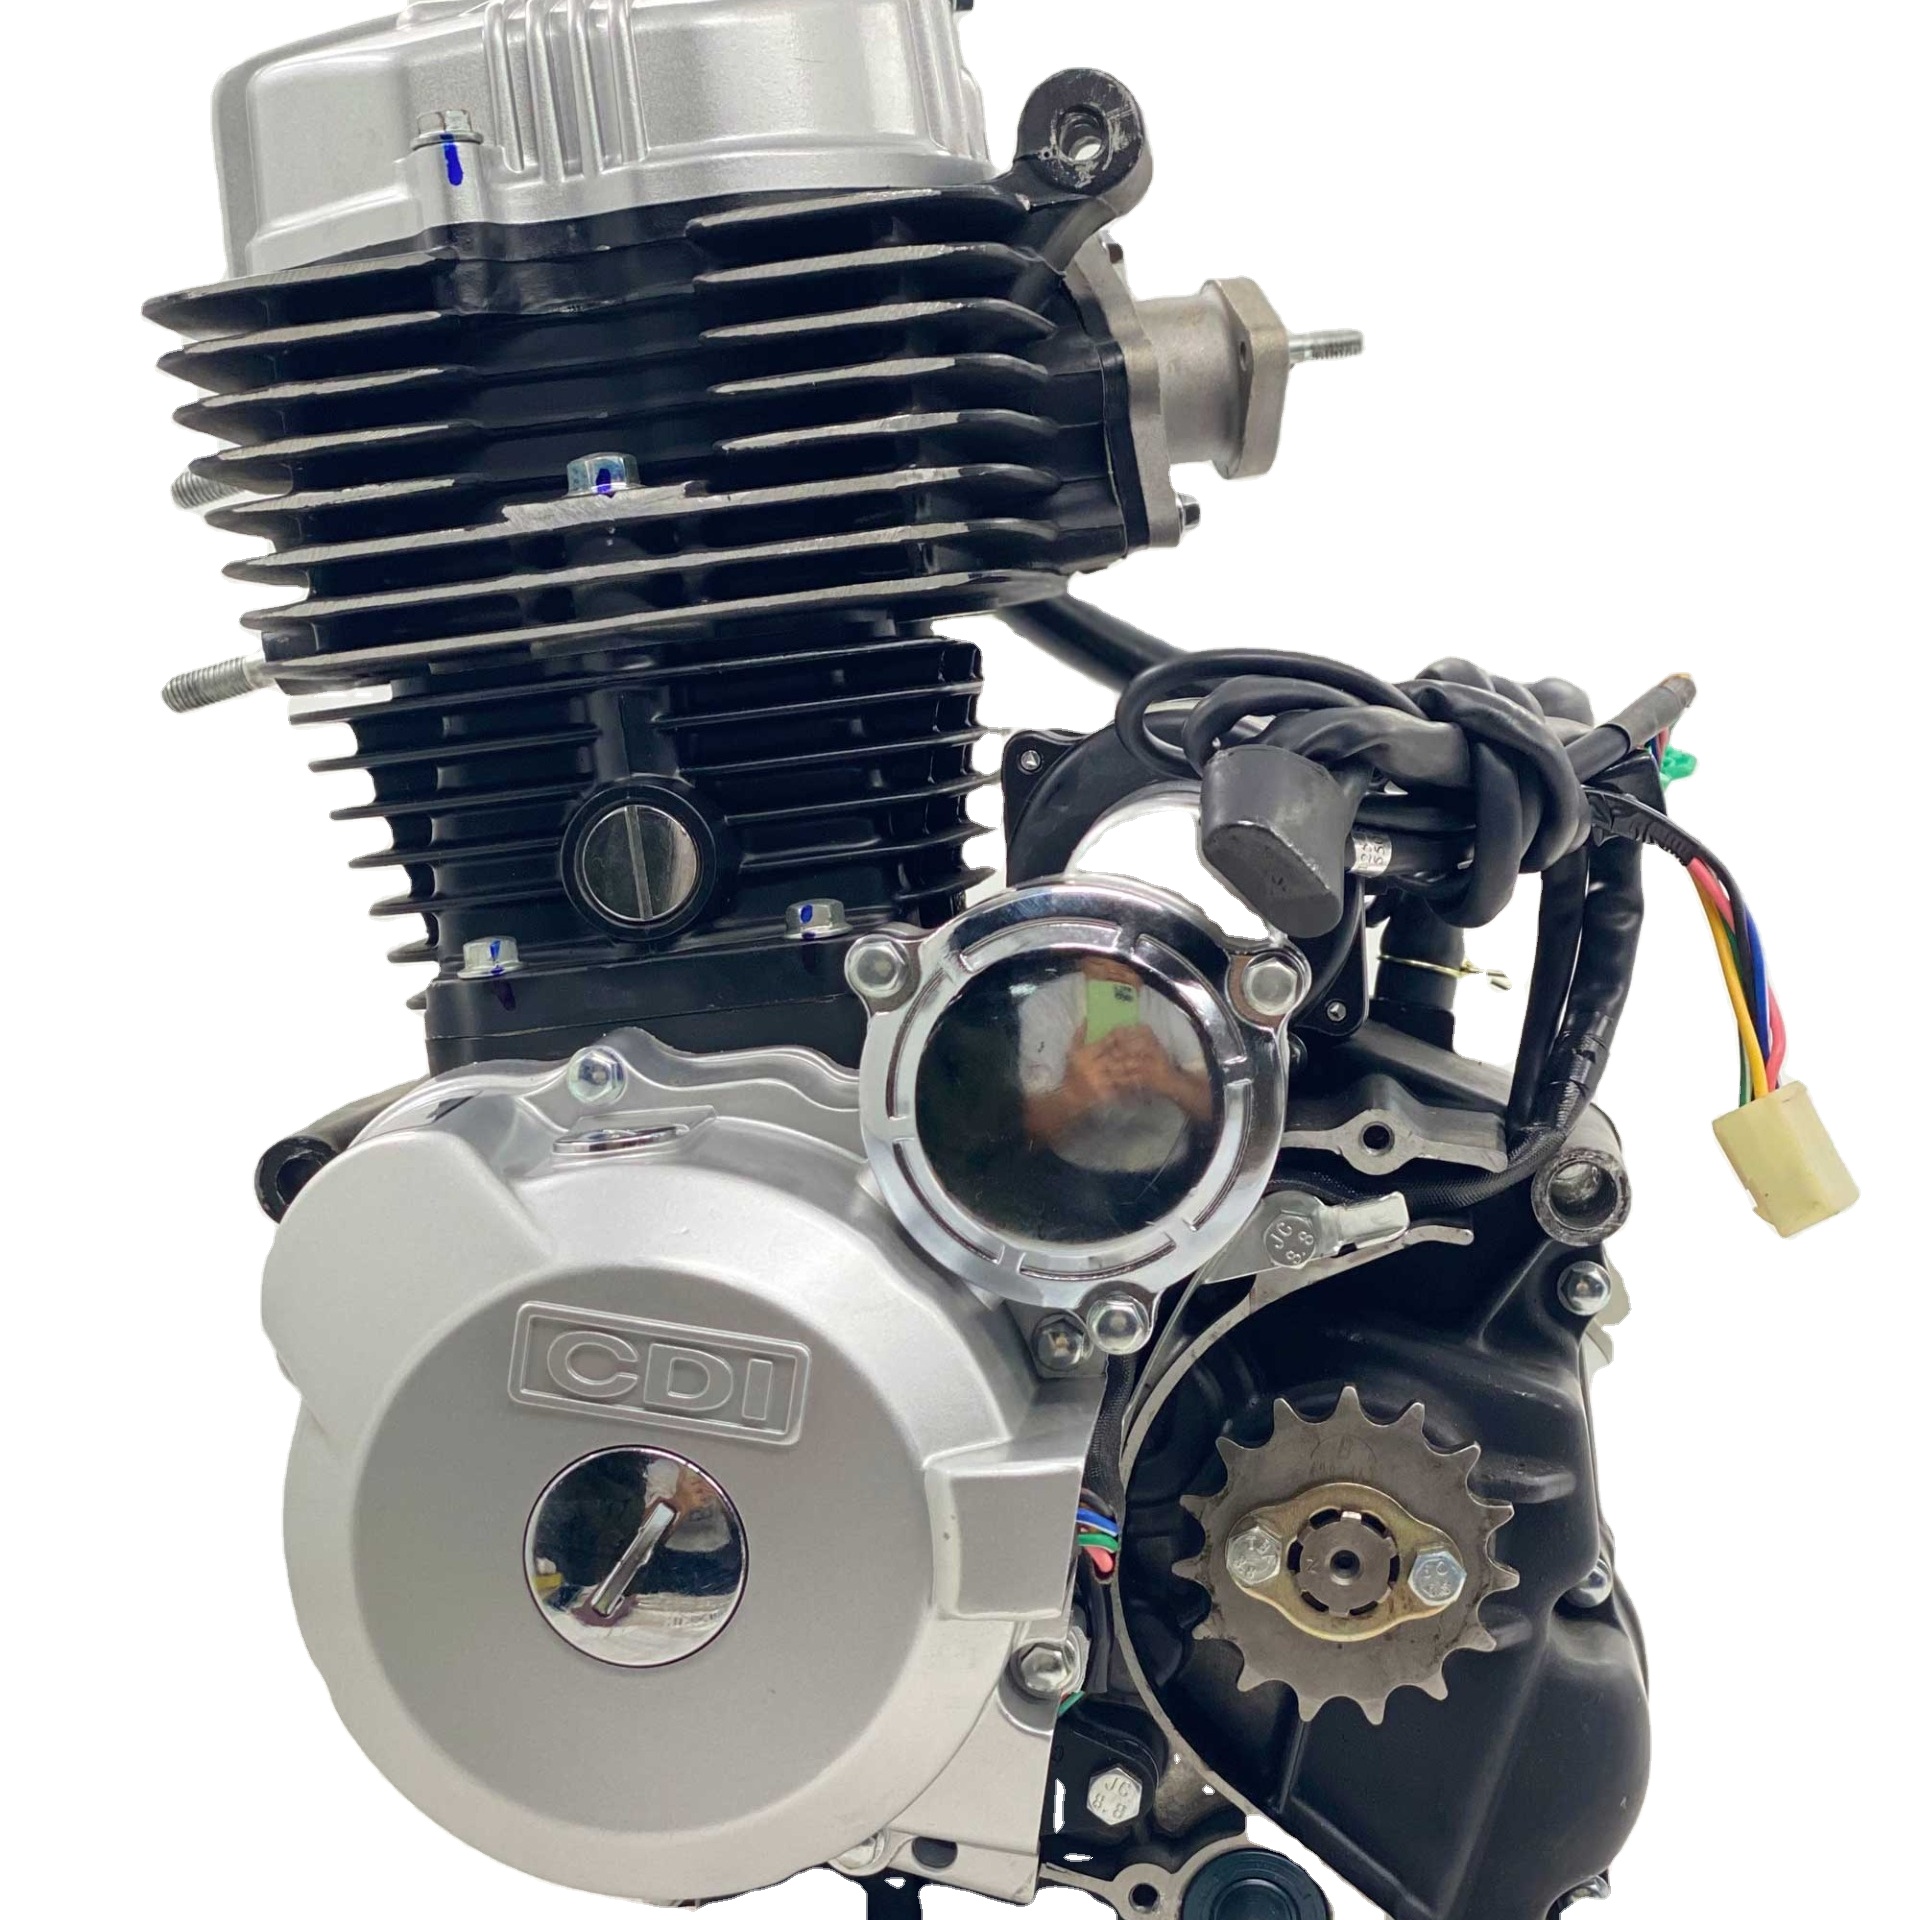 China Cheap Kick Start Motorcycle Engine Tricycle 150cc air cooling Engine Origin Ignition Warranty CDI Start Kick